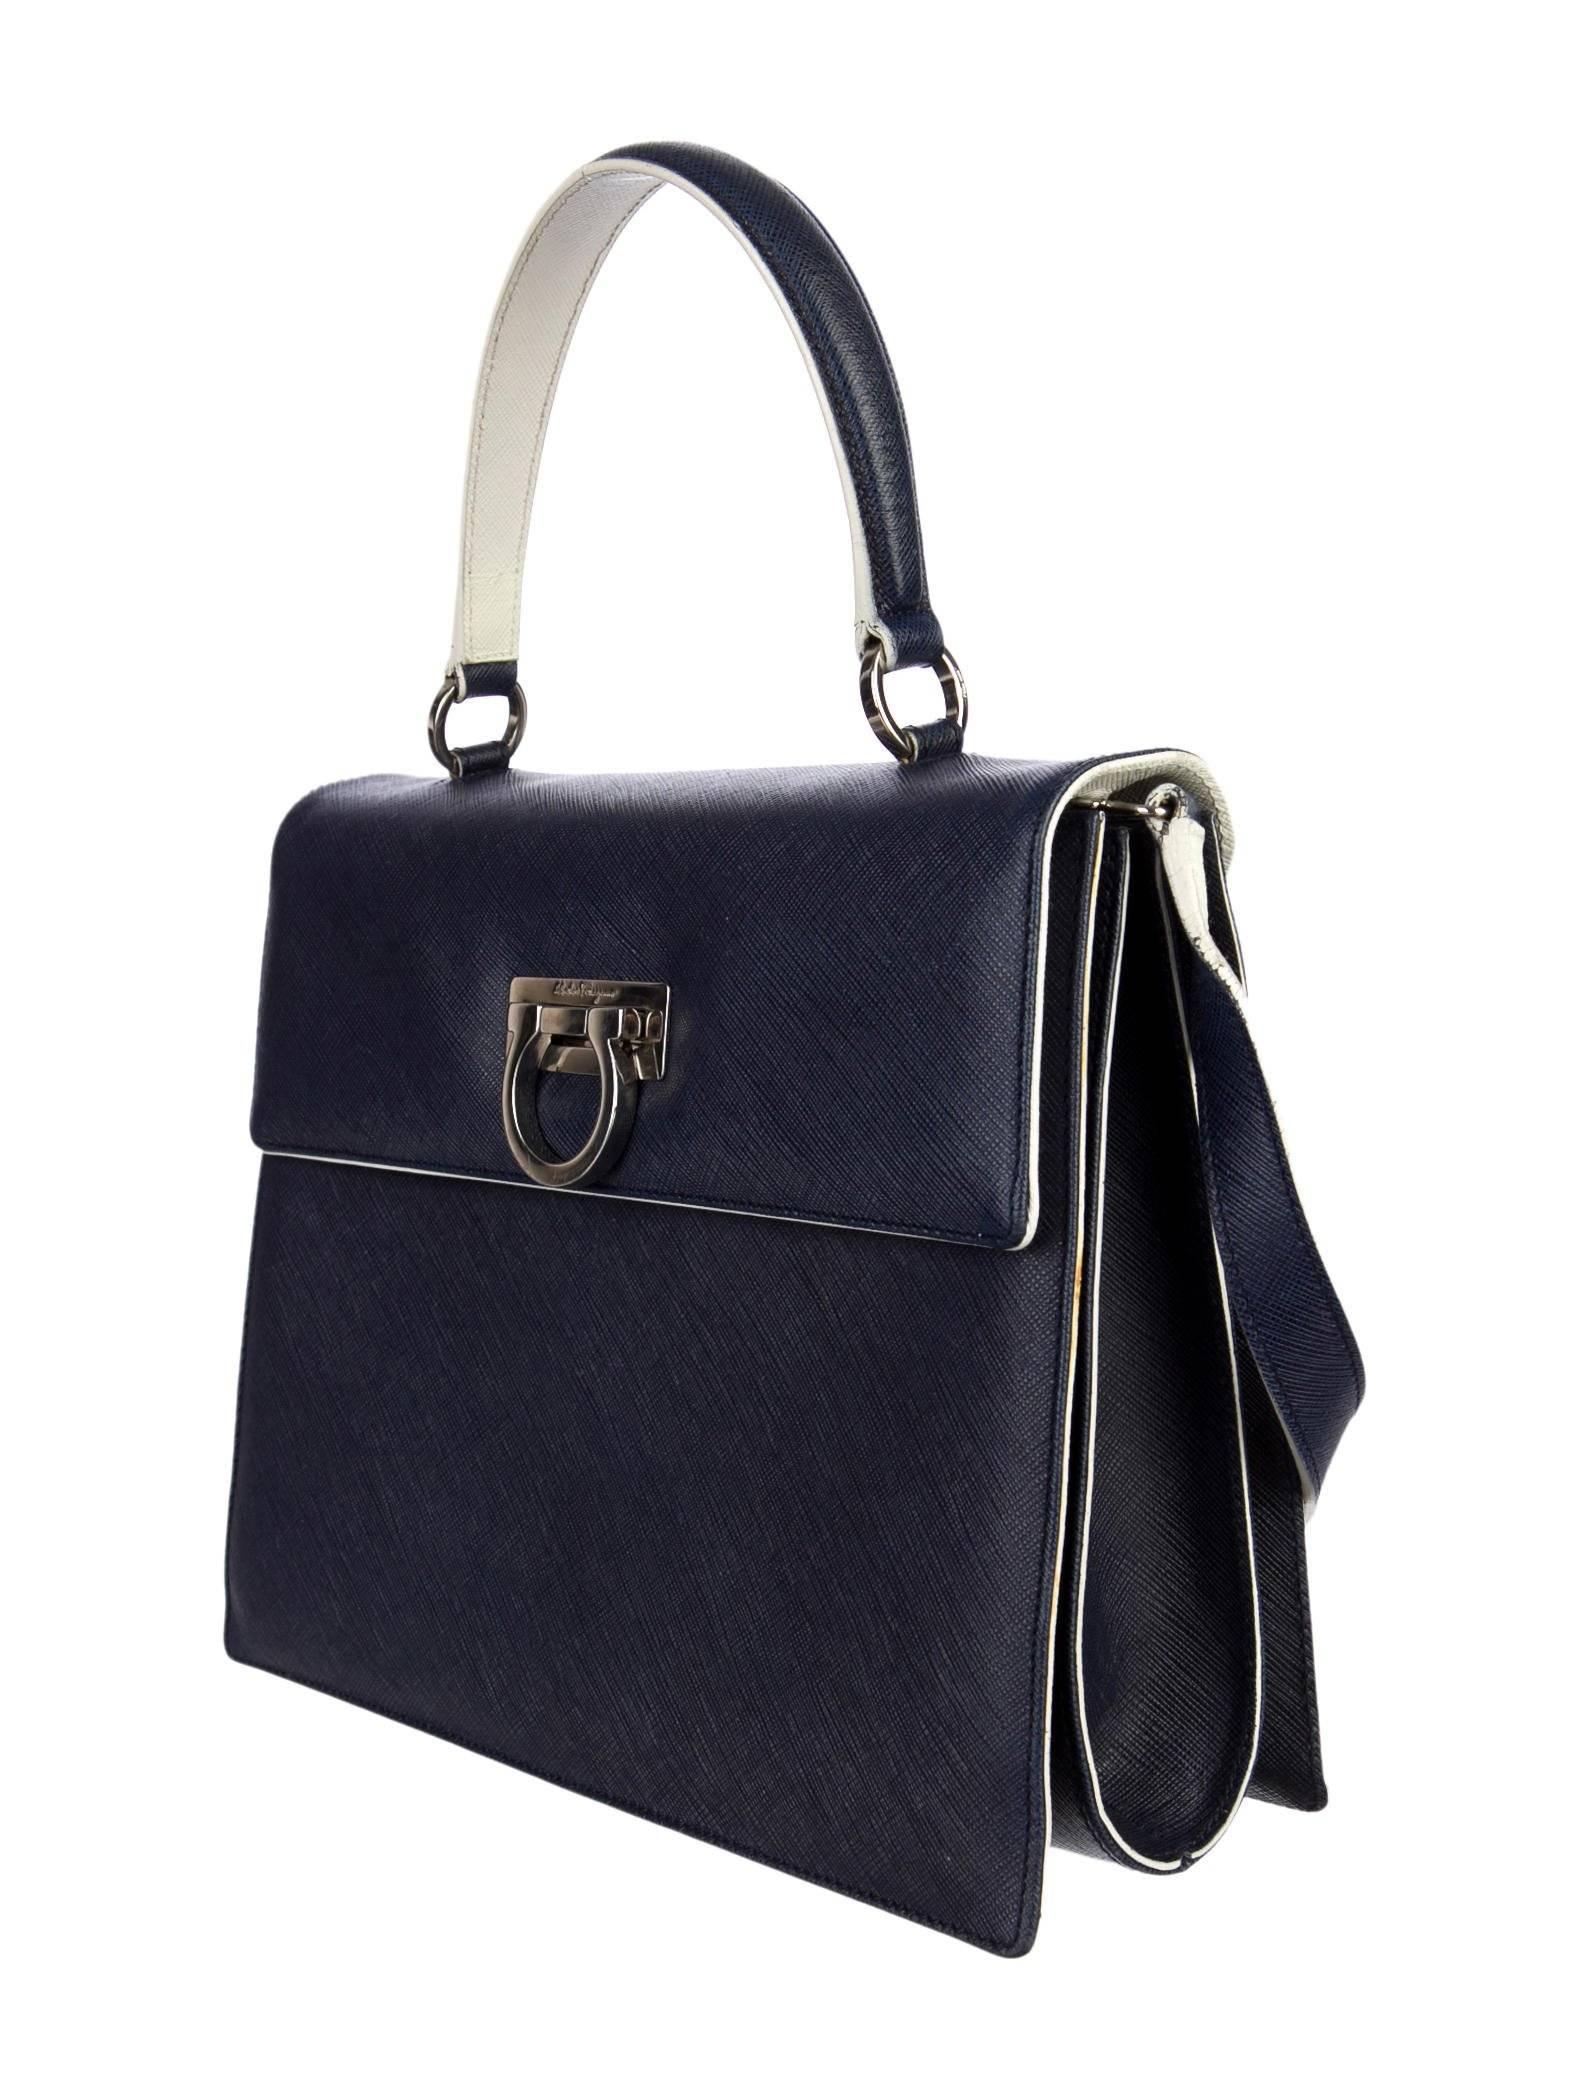 Black Salvatore Ferragamo Blue Leather Top Handle Shoulder Bag